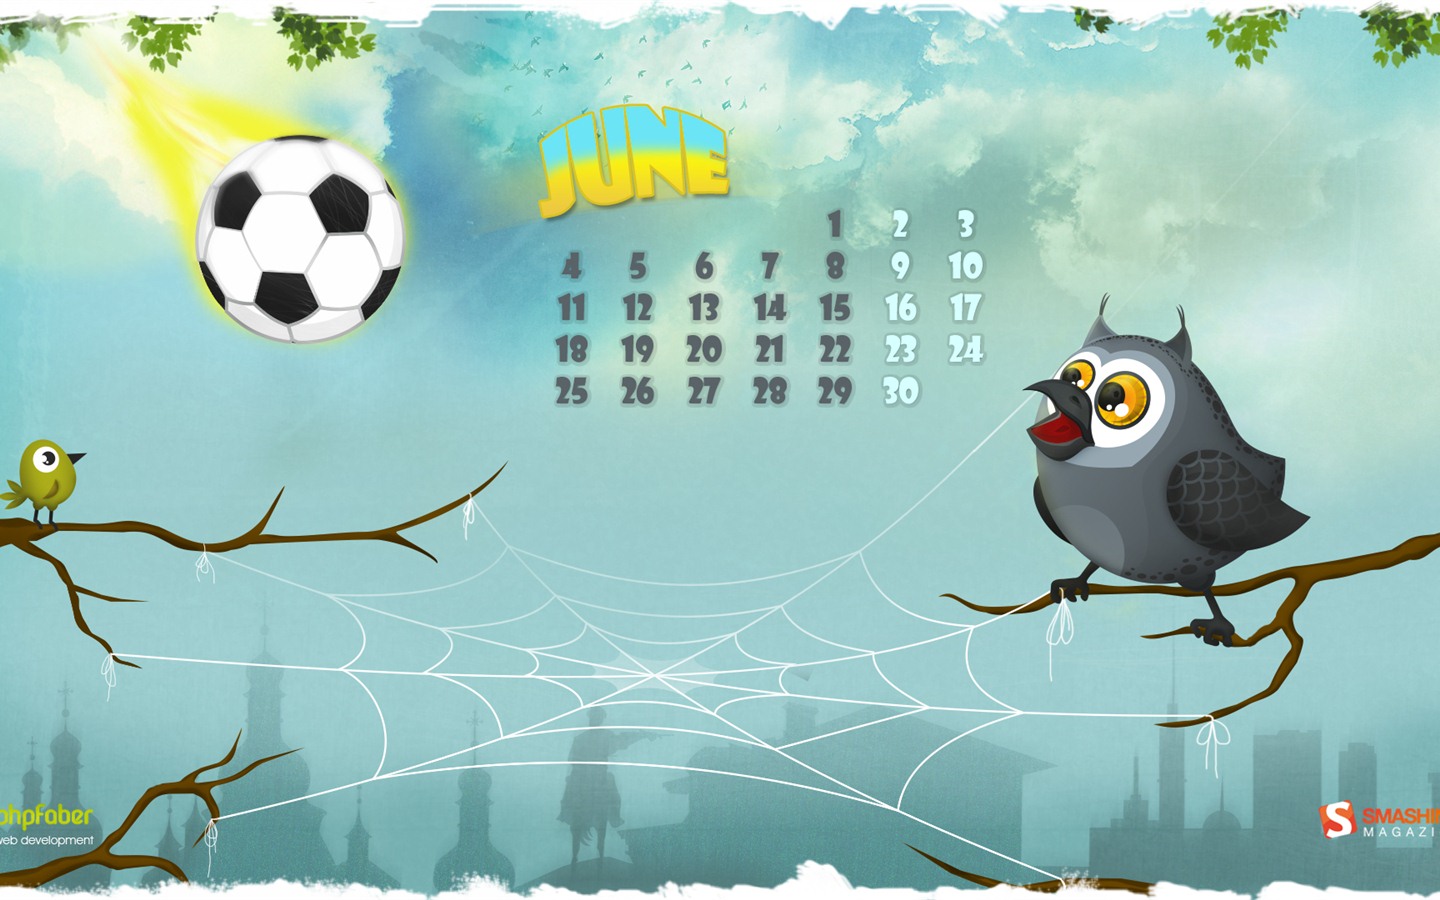 June 2012 Calendar wallpapers (1) #15 - 1440x900